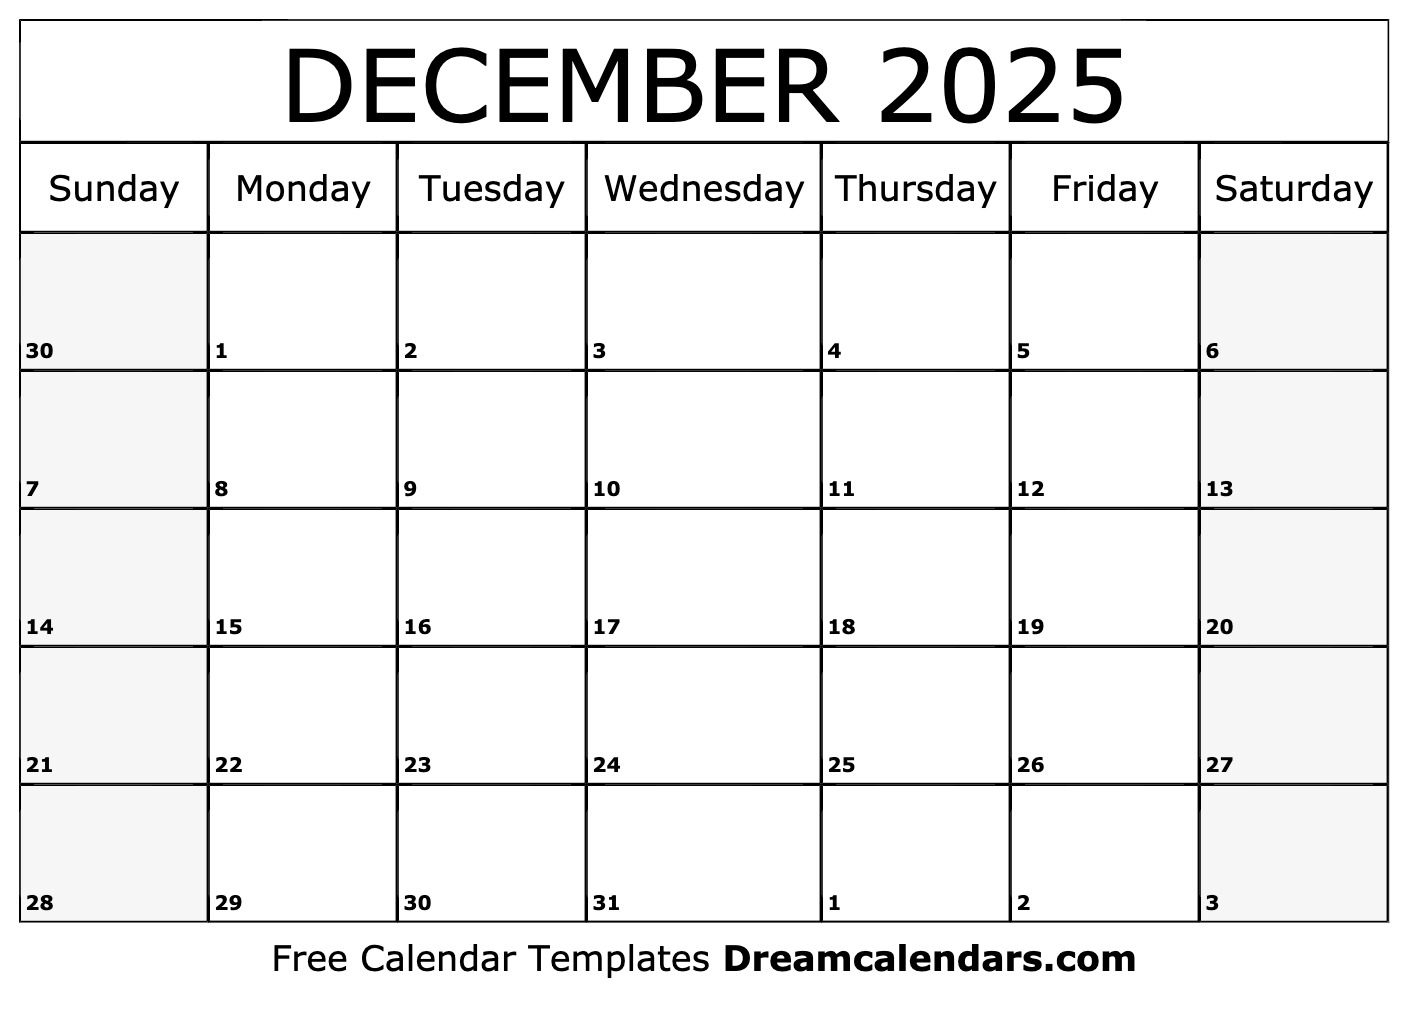 December calendar free blank printable with holidays